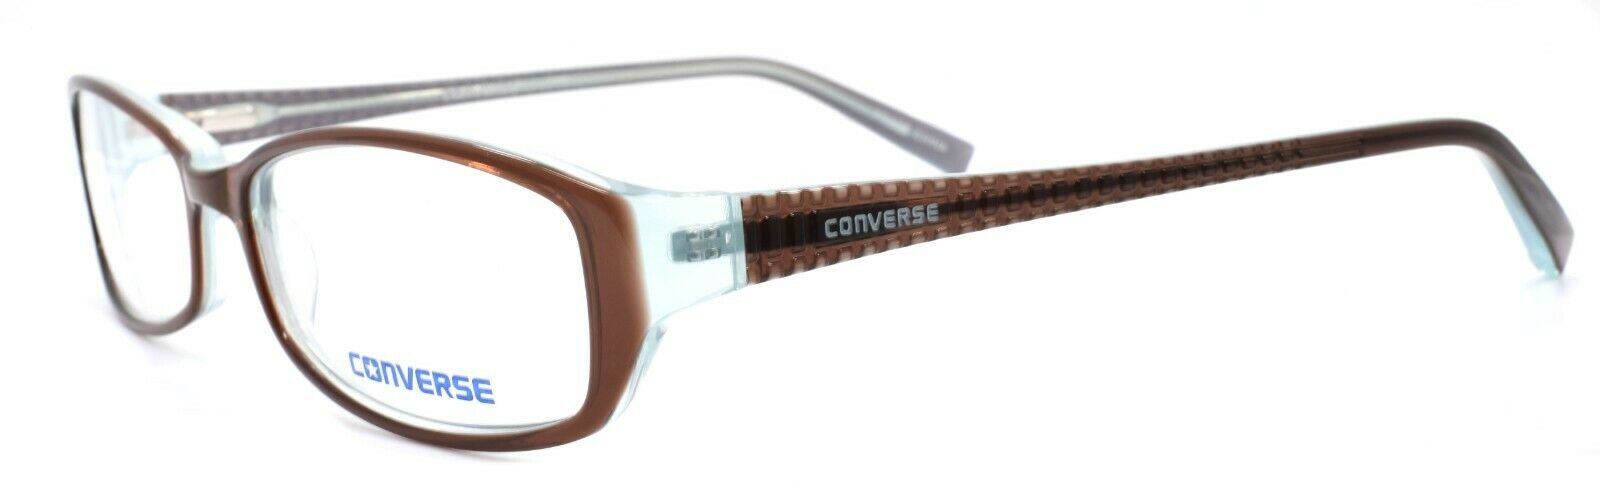 1-CONVERSE Black Top Women's Eyeglasses Frames 52-15-135 Brown + CASE-751286139822-IKSpecs